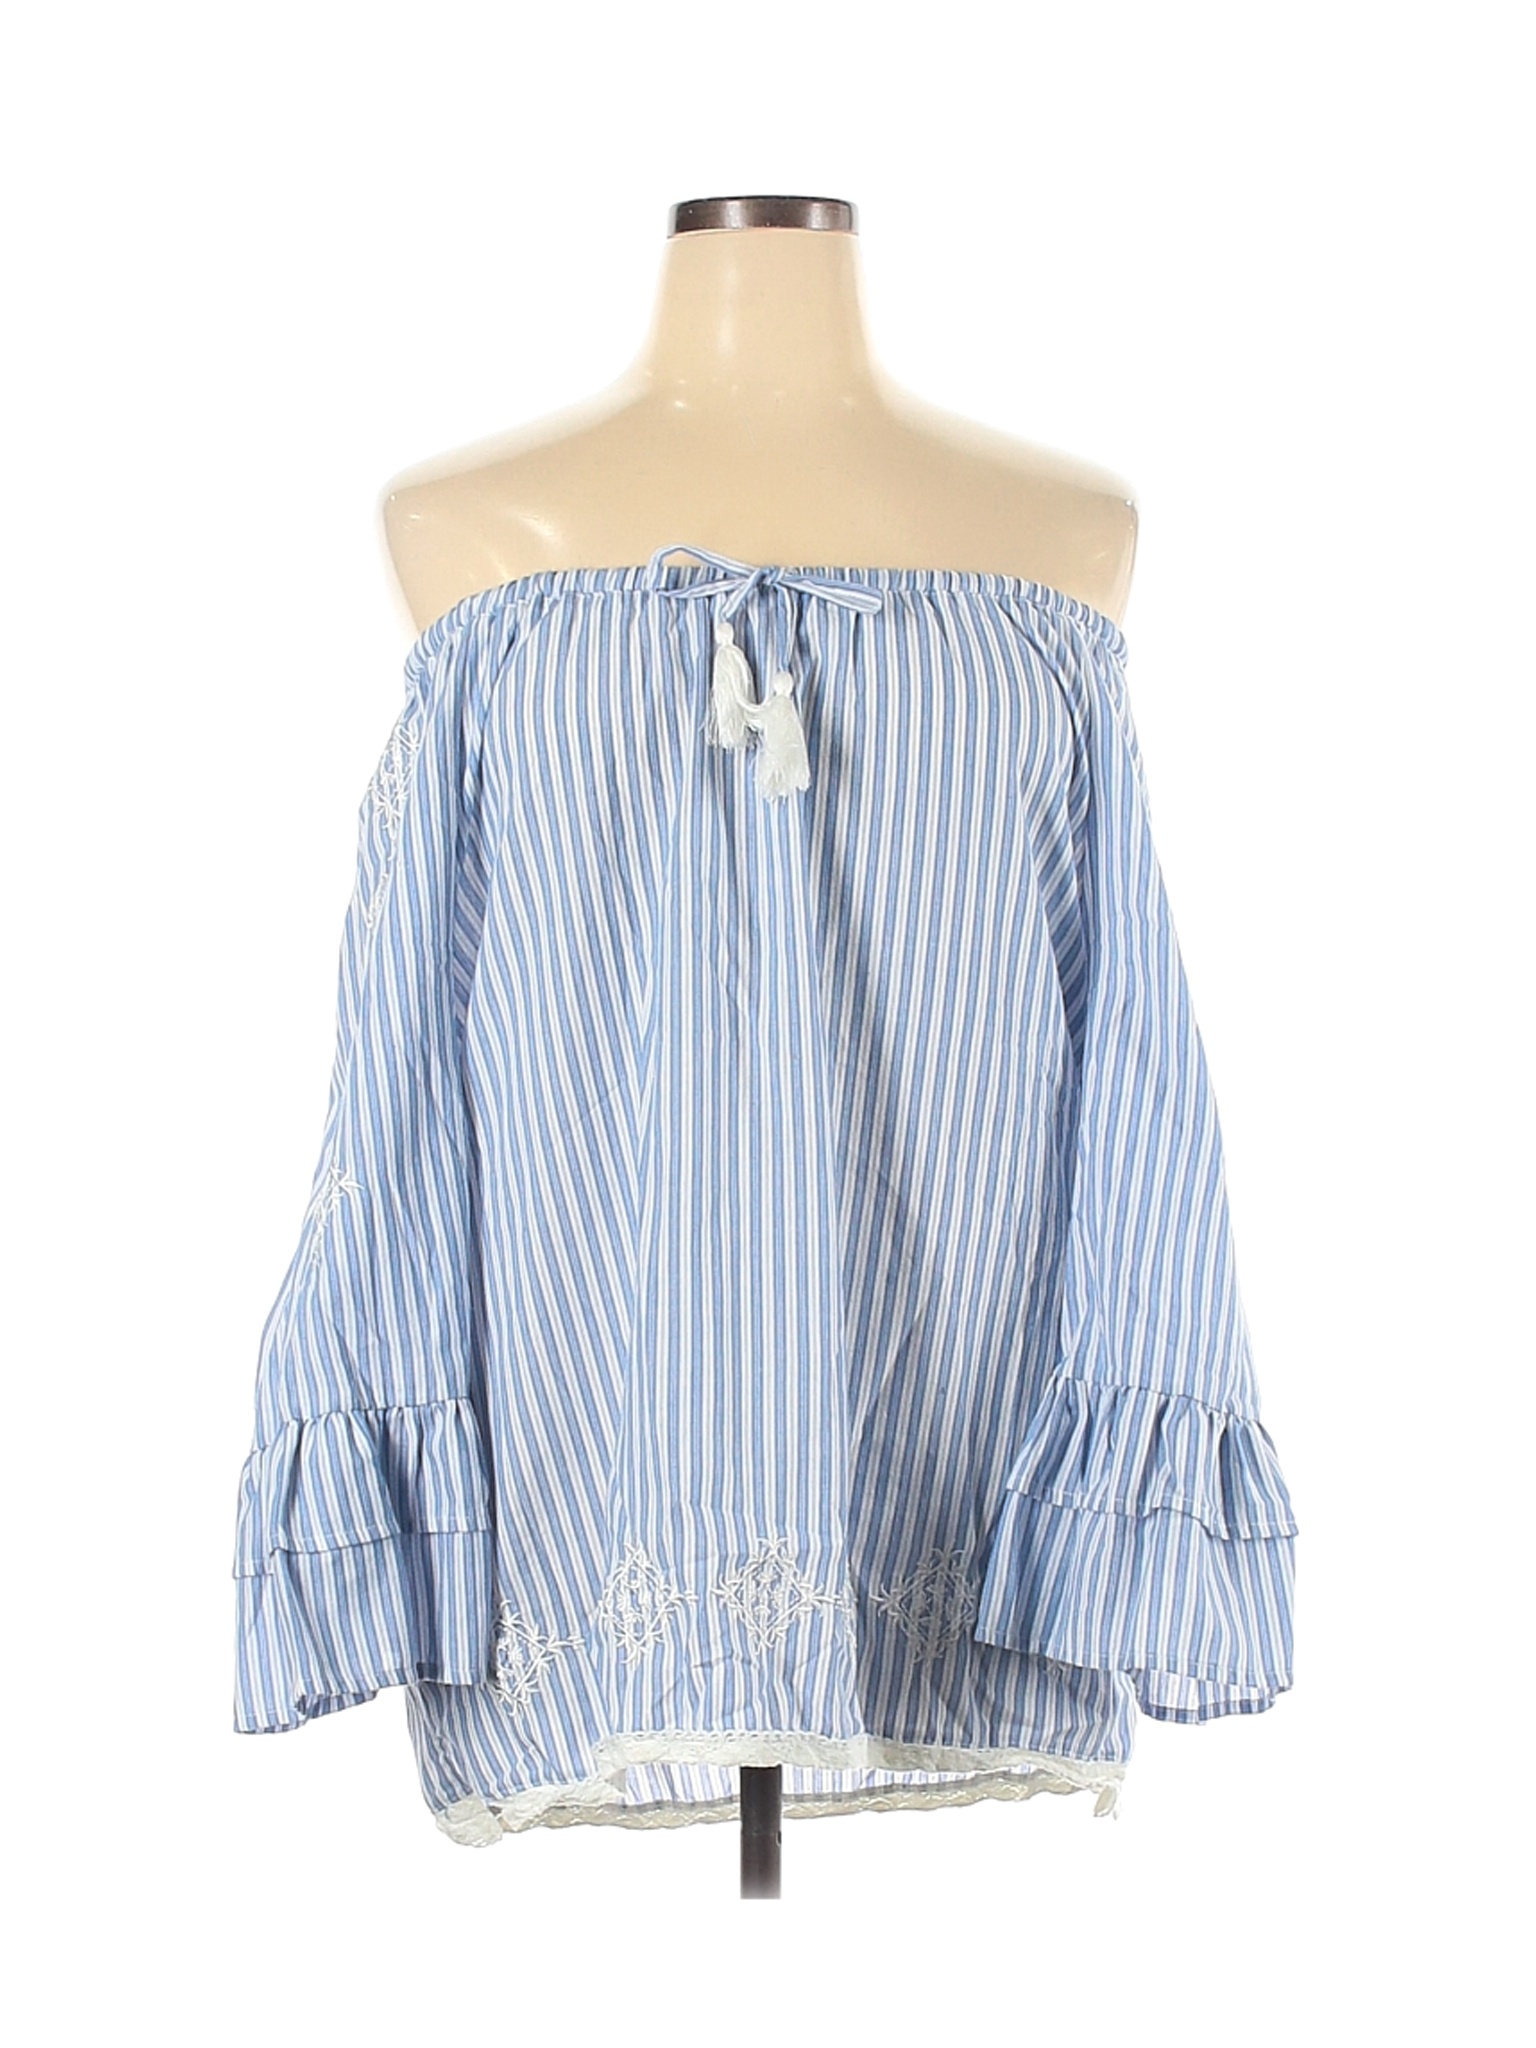 Westport Women Blue Long Sleeve Top XL | eBay